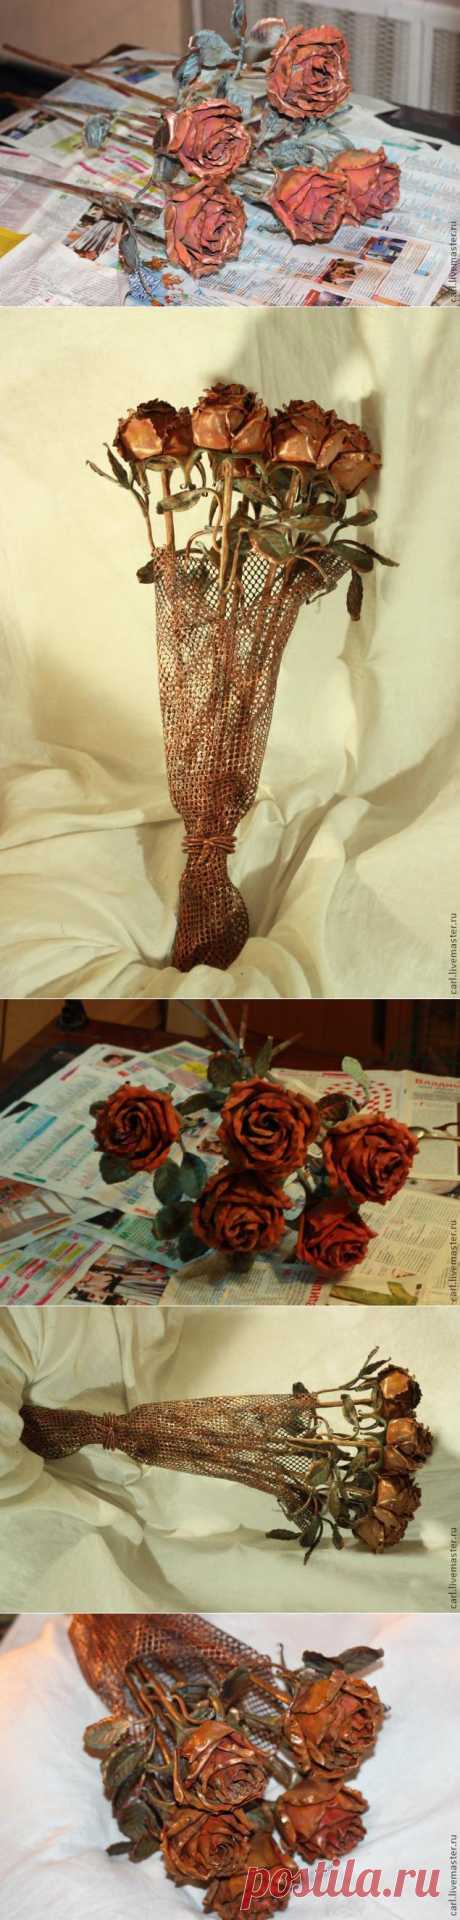 Букет медных роз - Ярмарка Мастеров - ручная работа, handmade